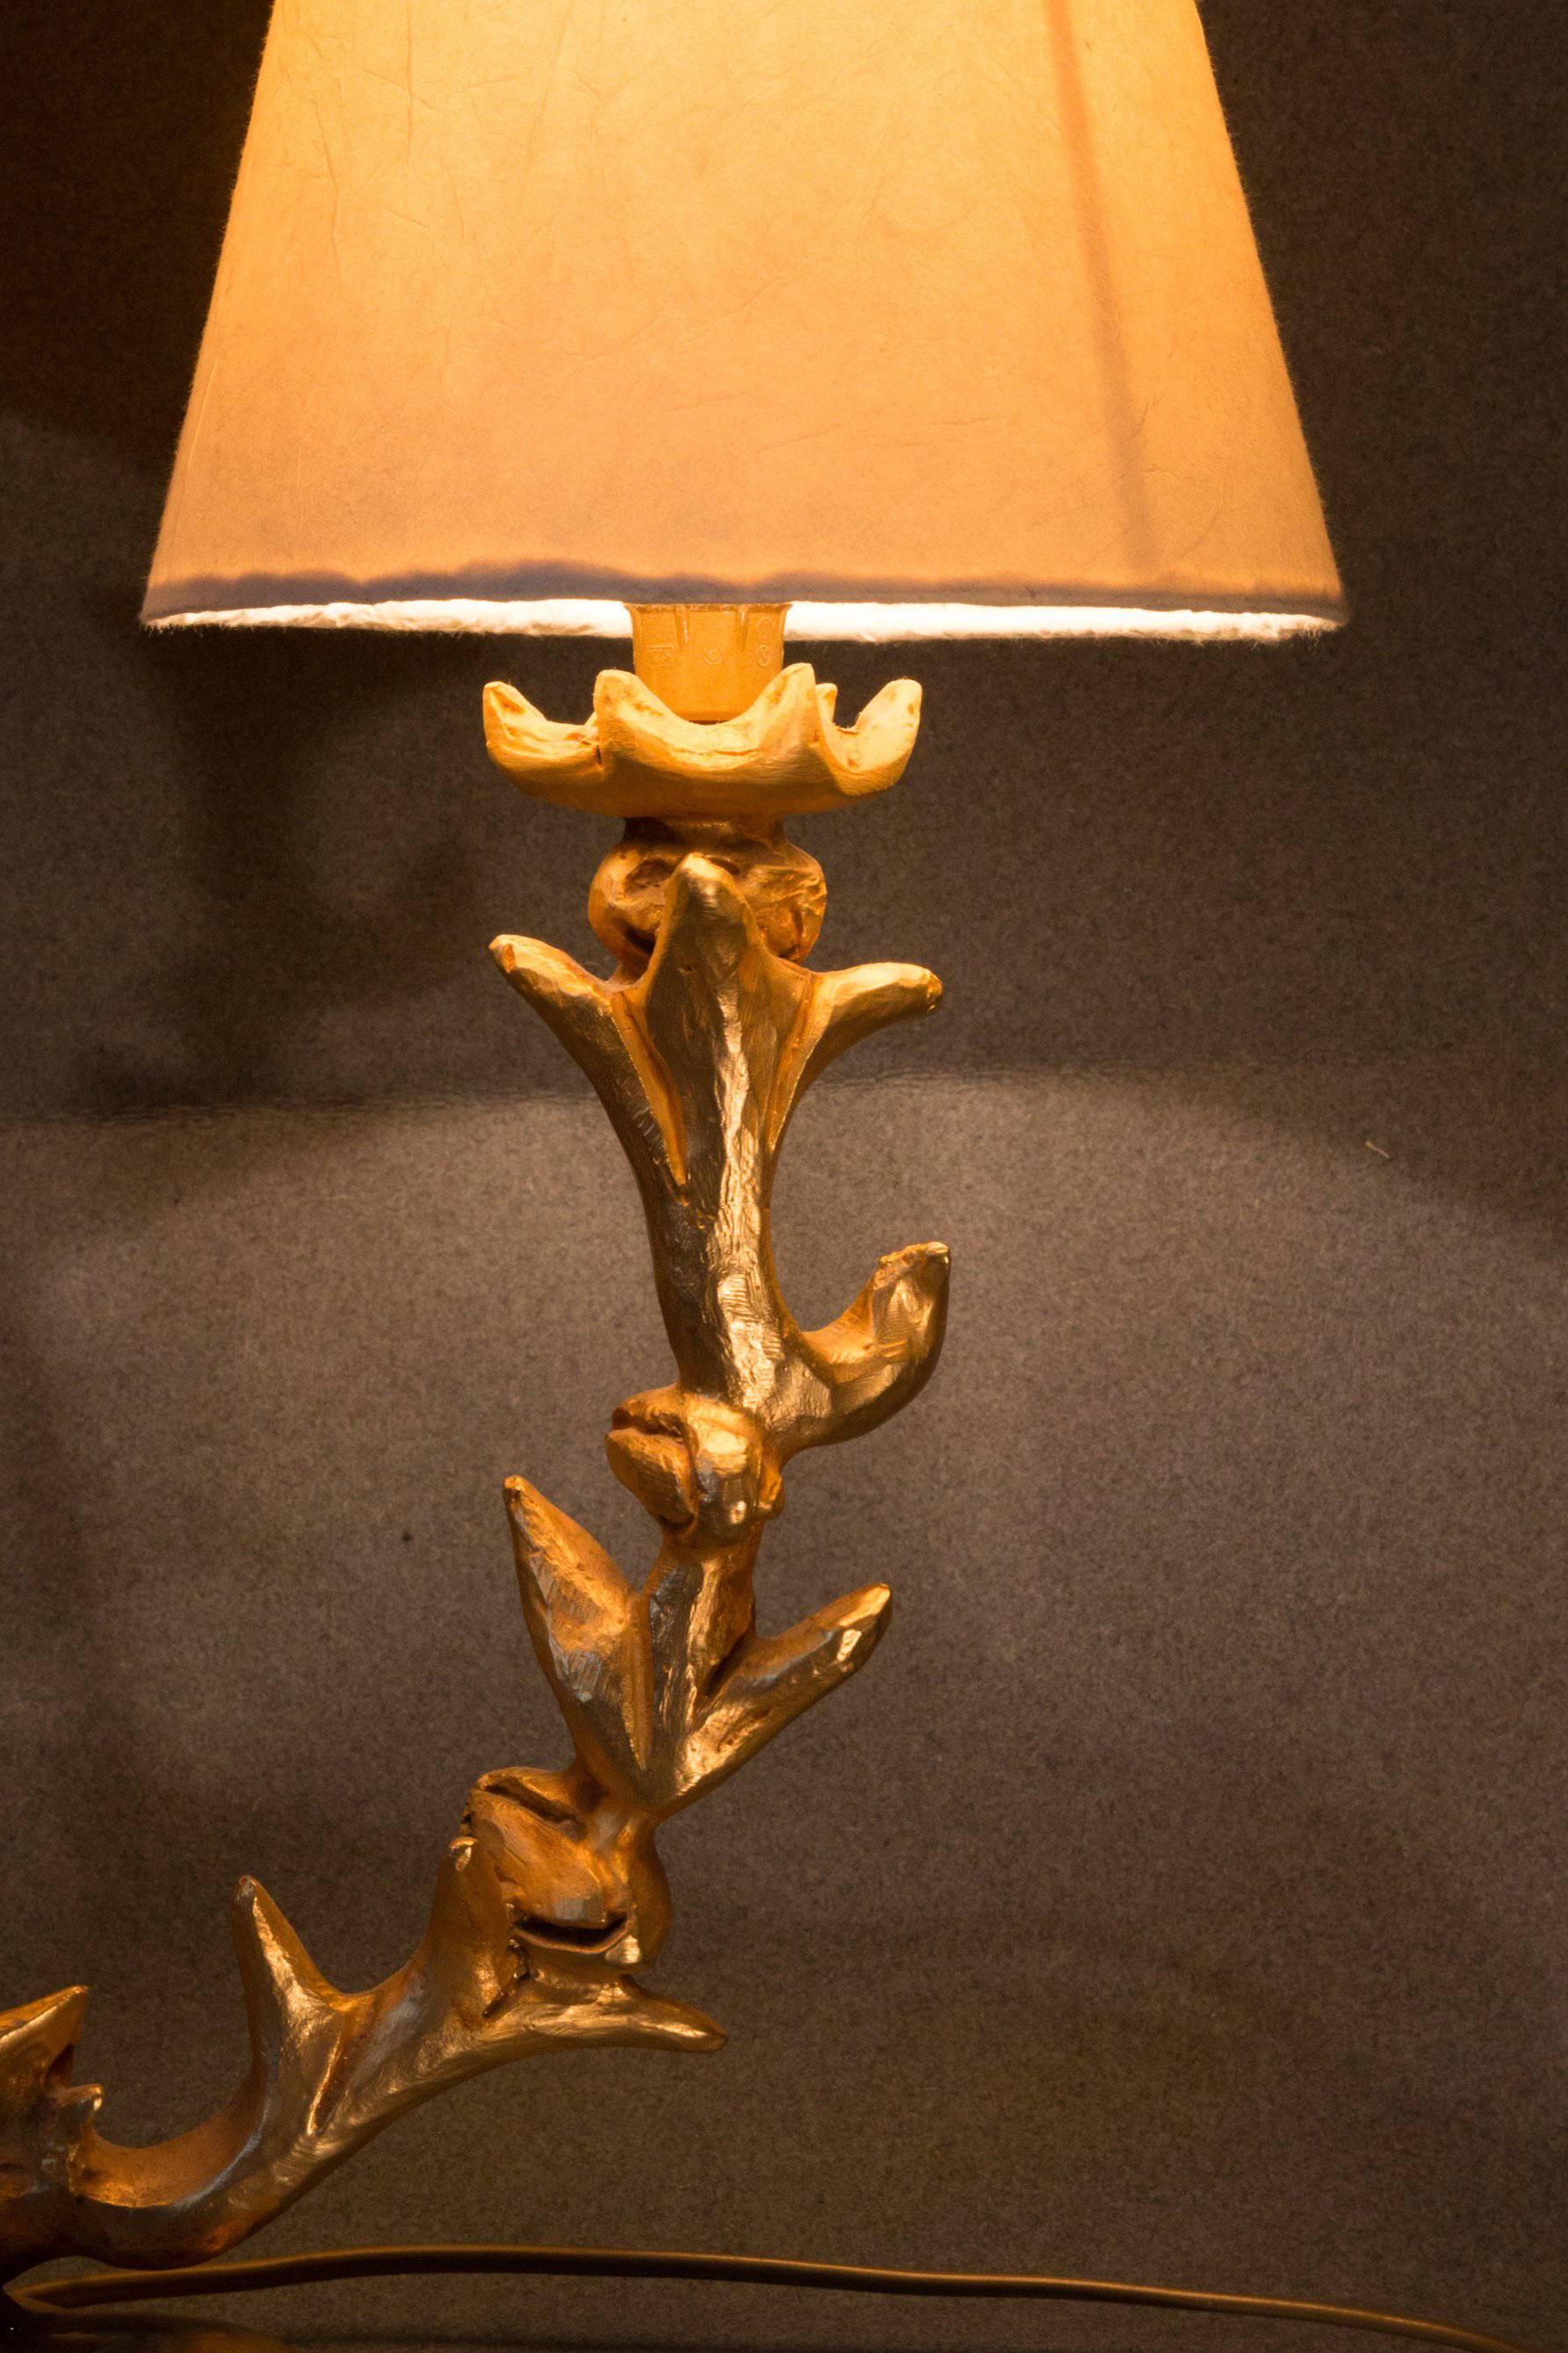 20th Century Rare French Sculptural Ormolu Table Lamp by Mathias for Fondica, circa 1995